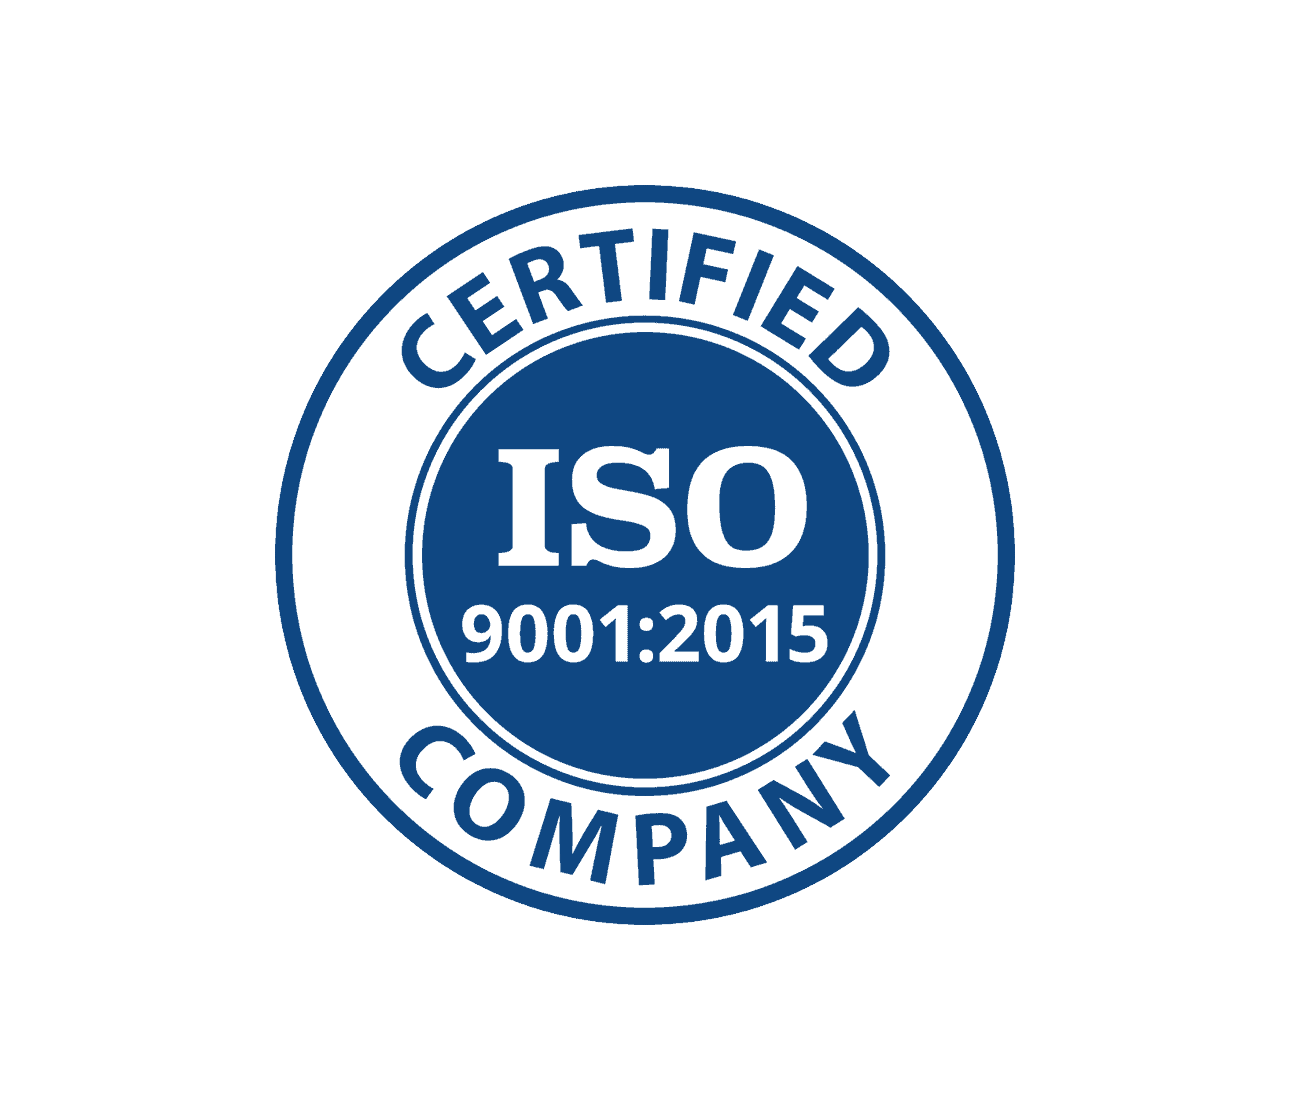 ISO 9001:2015 Certified Company Logo